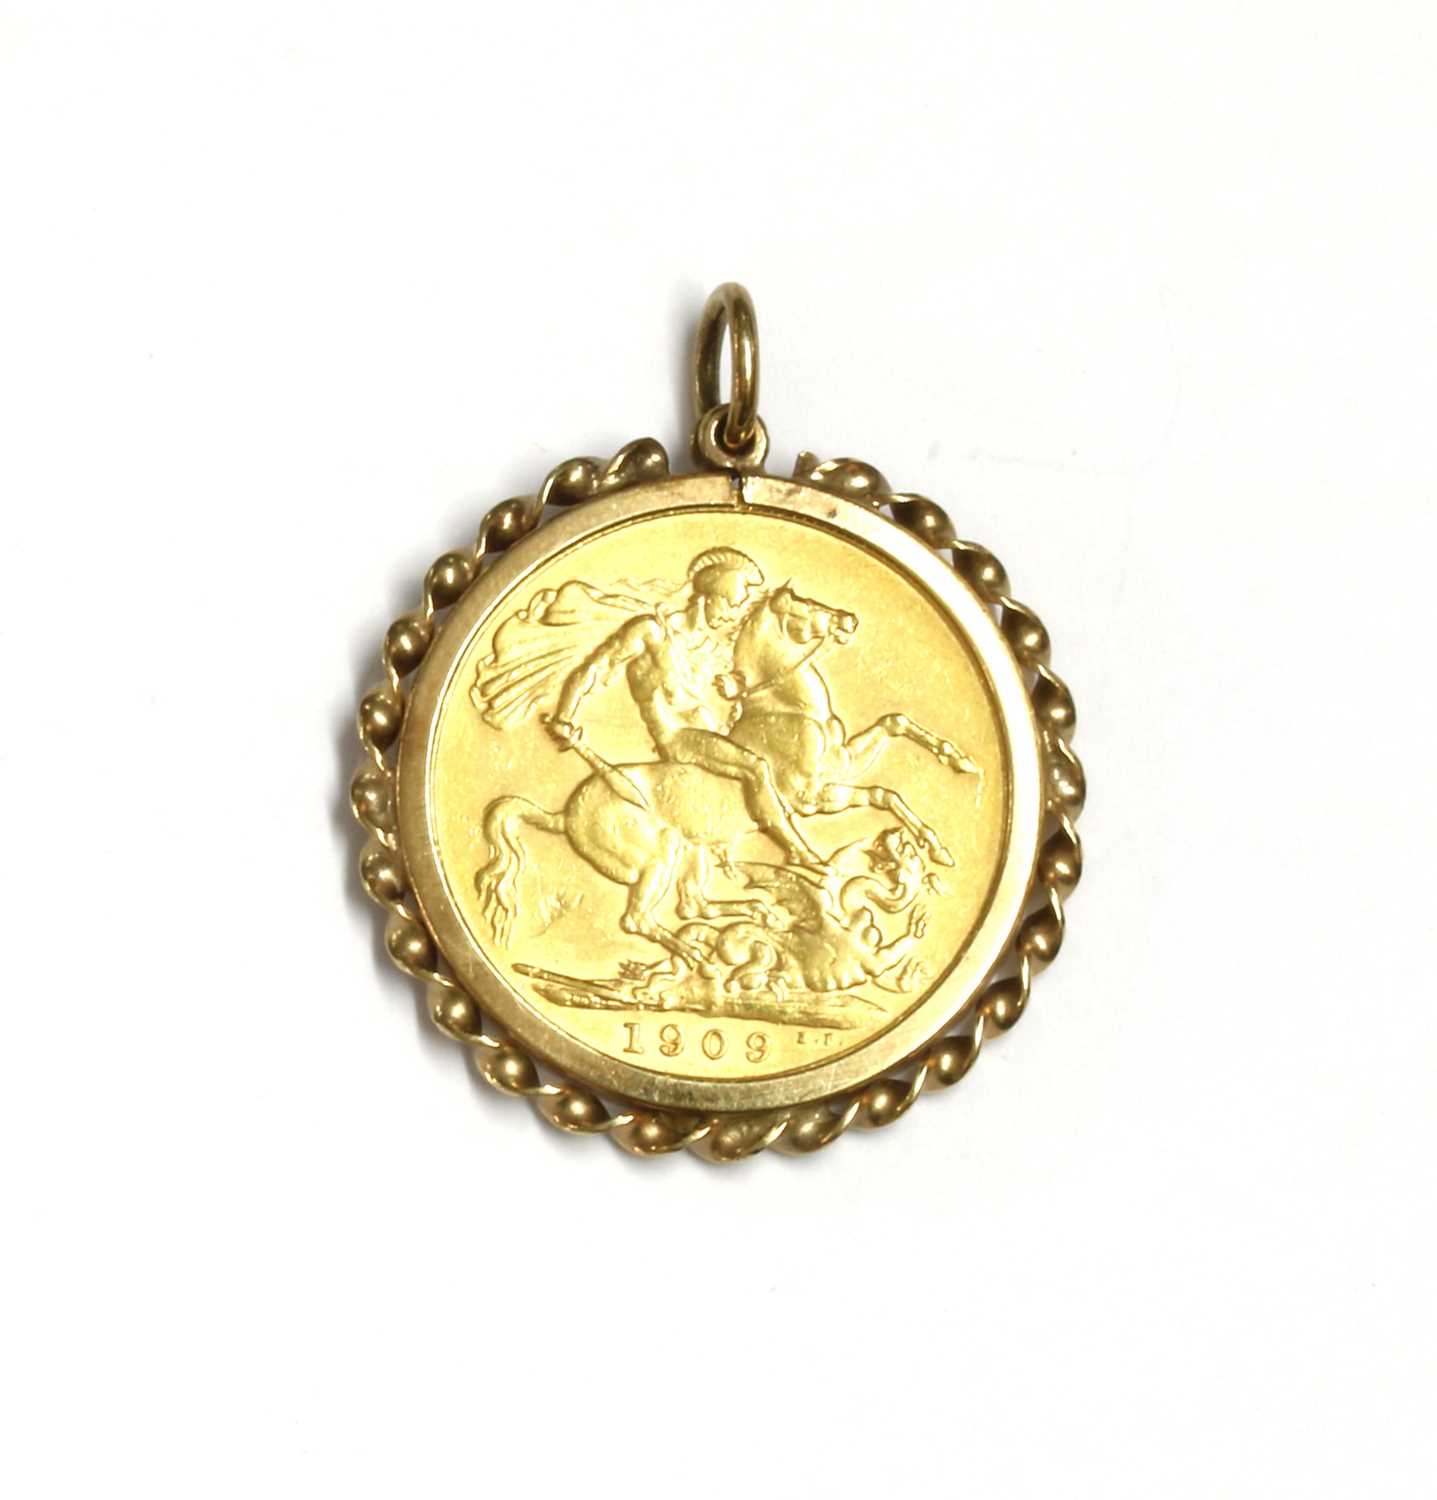 Lot 99 - An Edward VII sovereign pendant